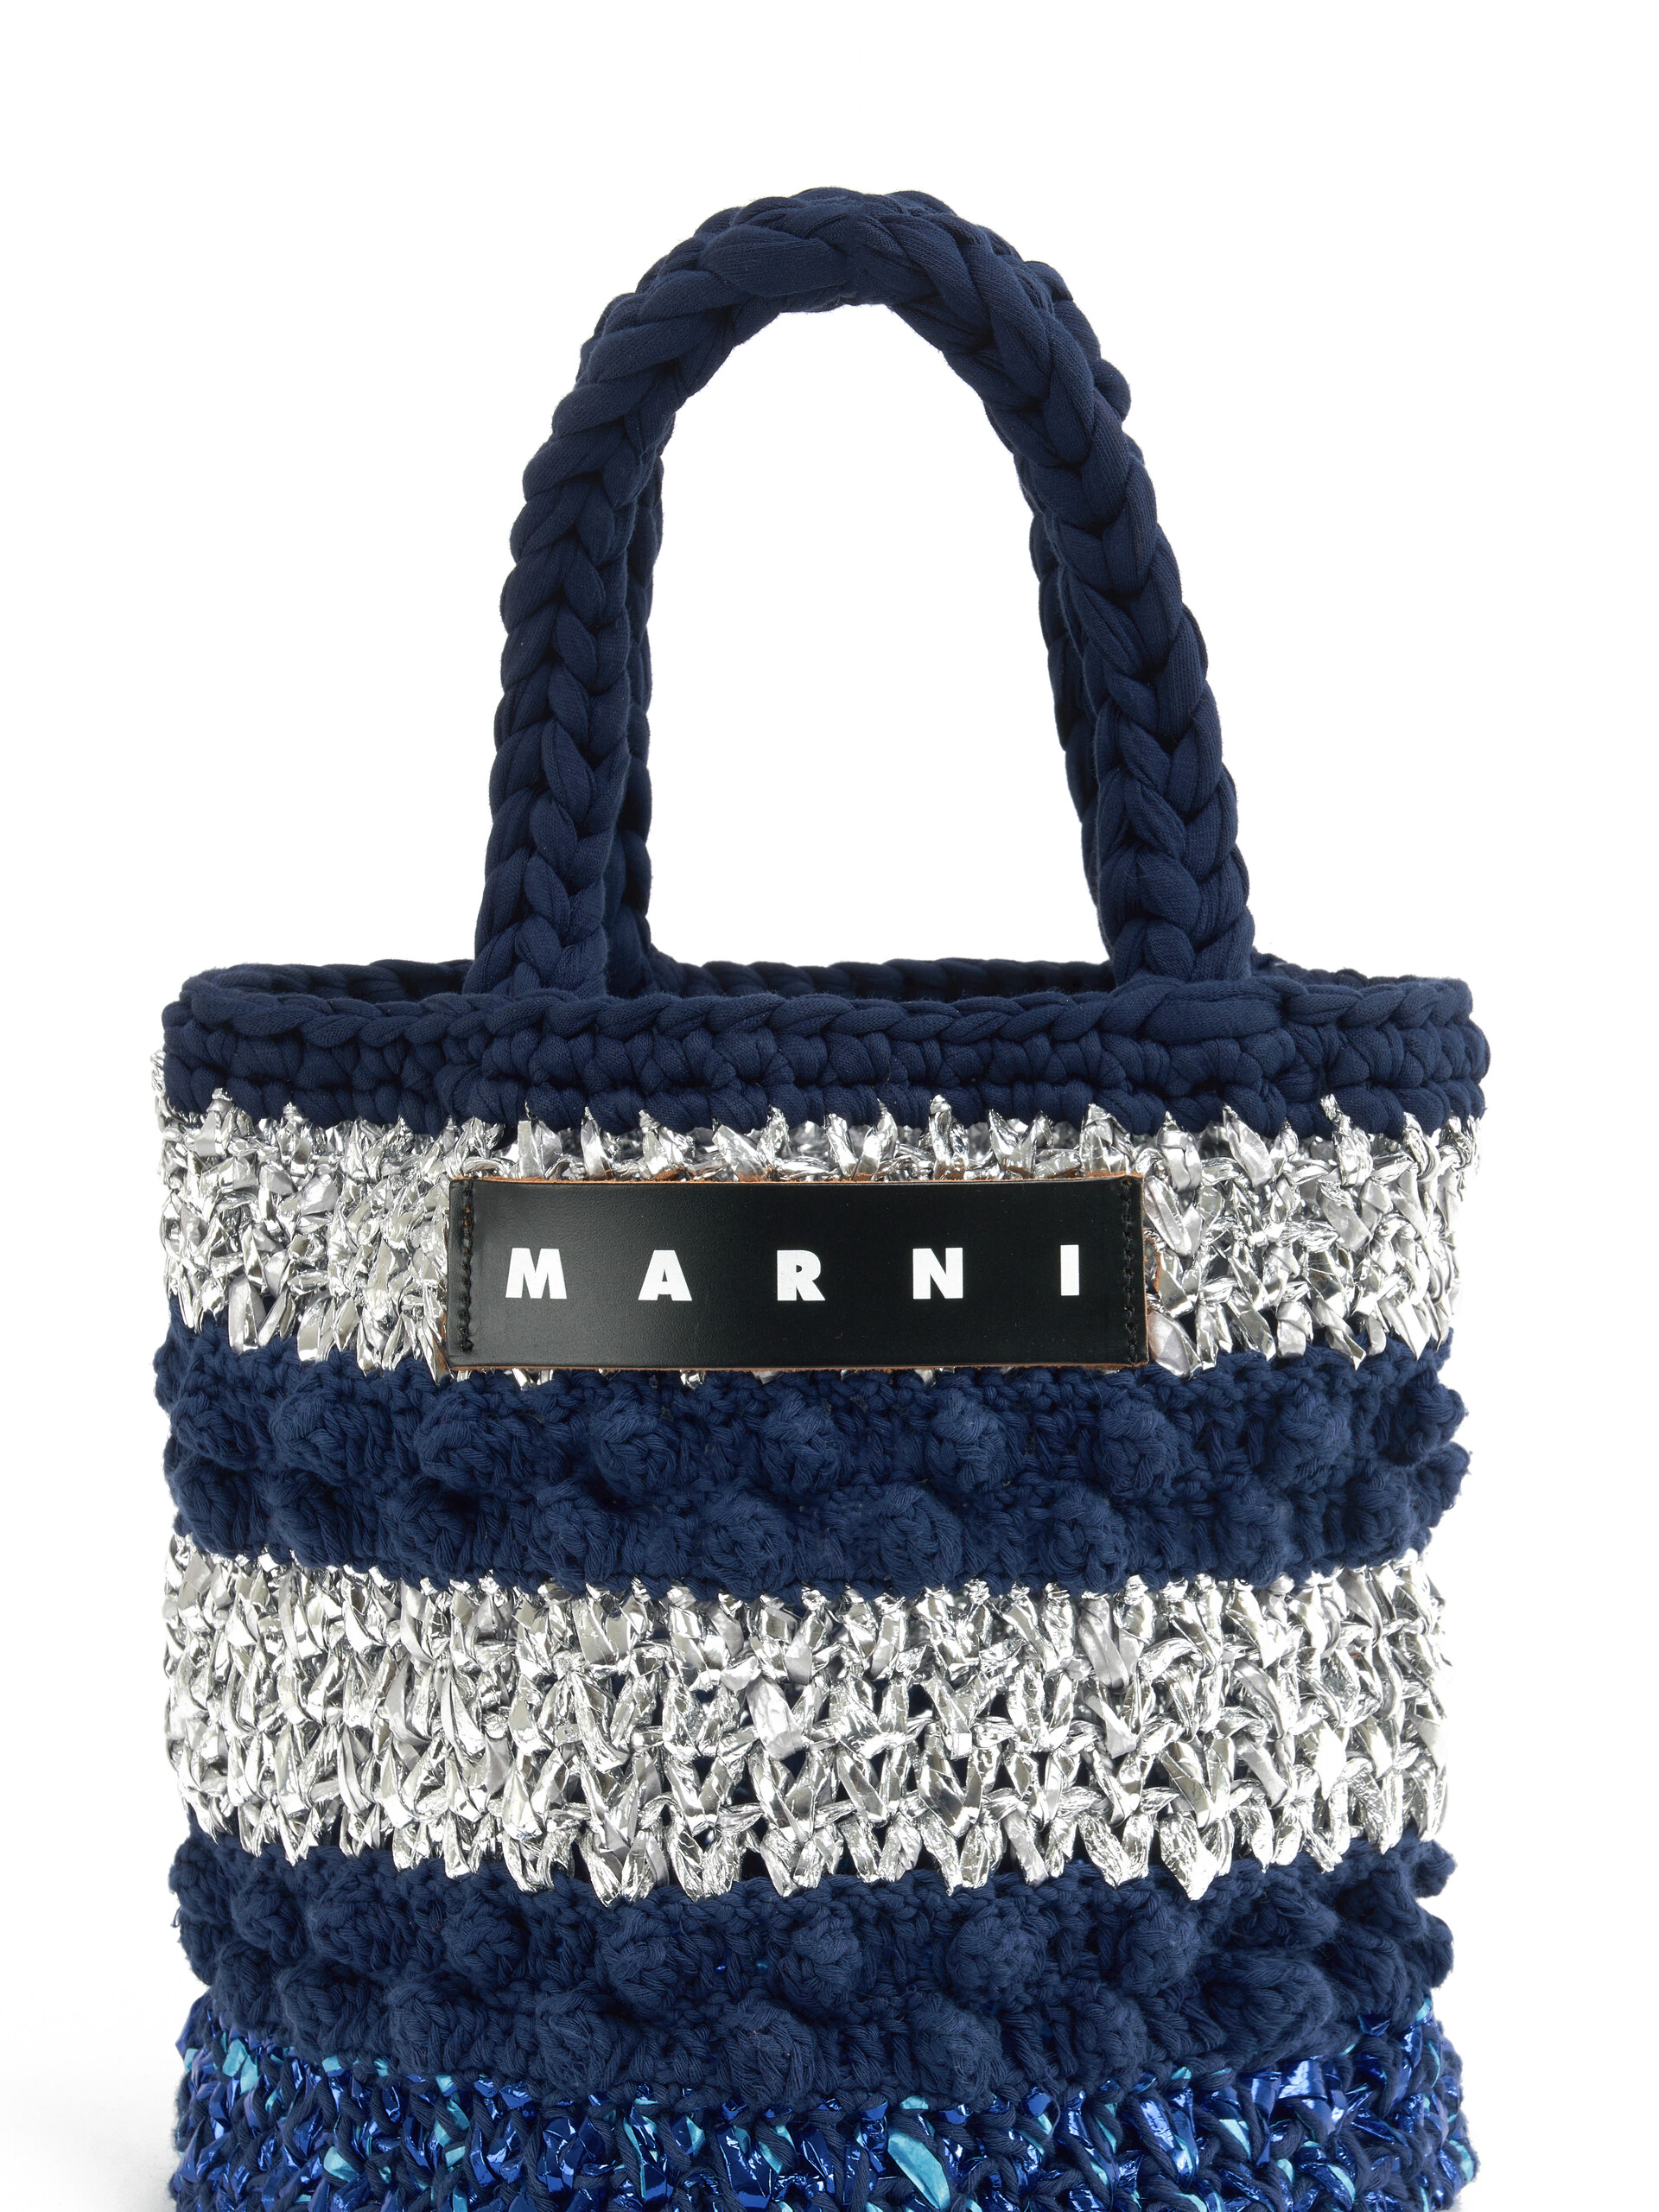 Deep blue and silver bobble-knit MARNI MARKET BUCKET bag - Shopping Bags - Image 4